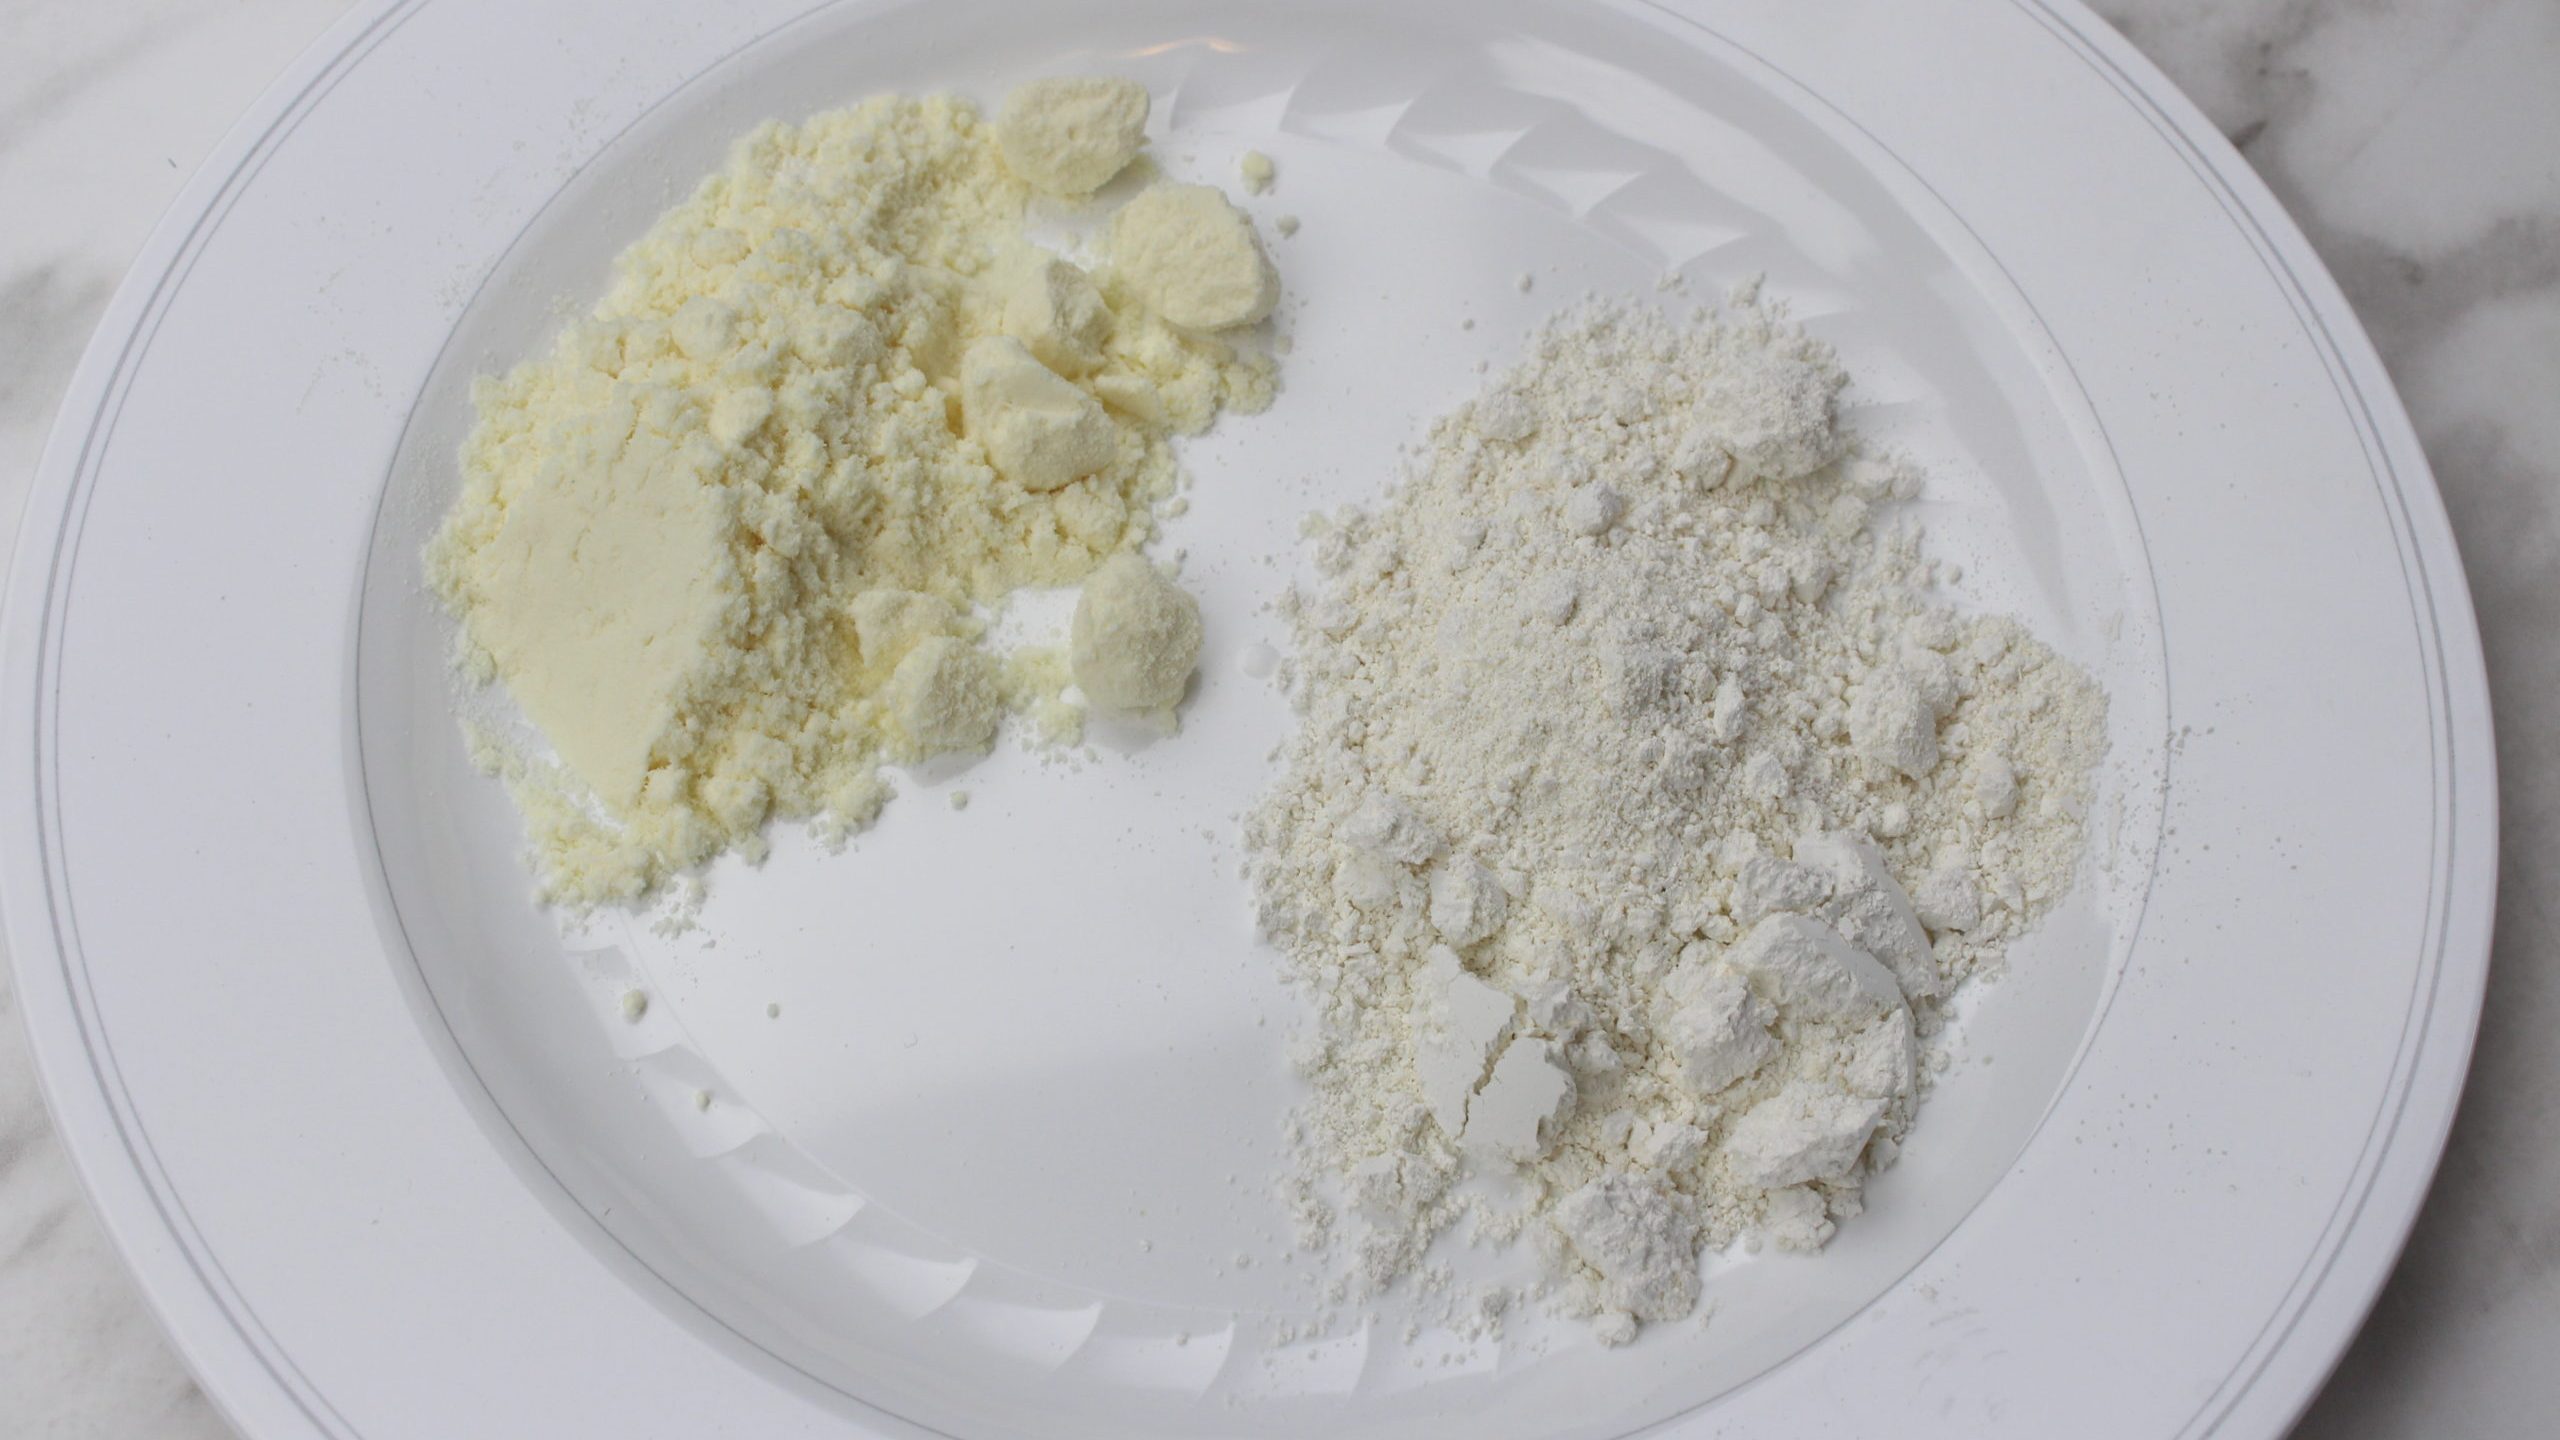 Kaolin Clay and Goat's Milk Powder